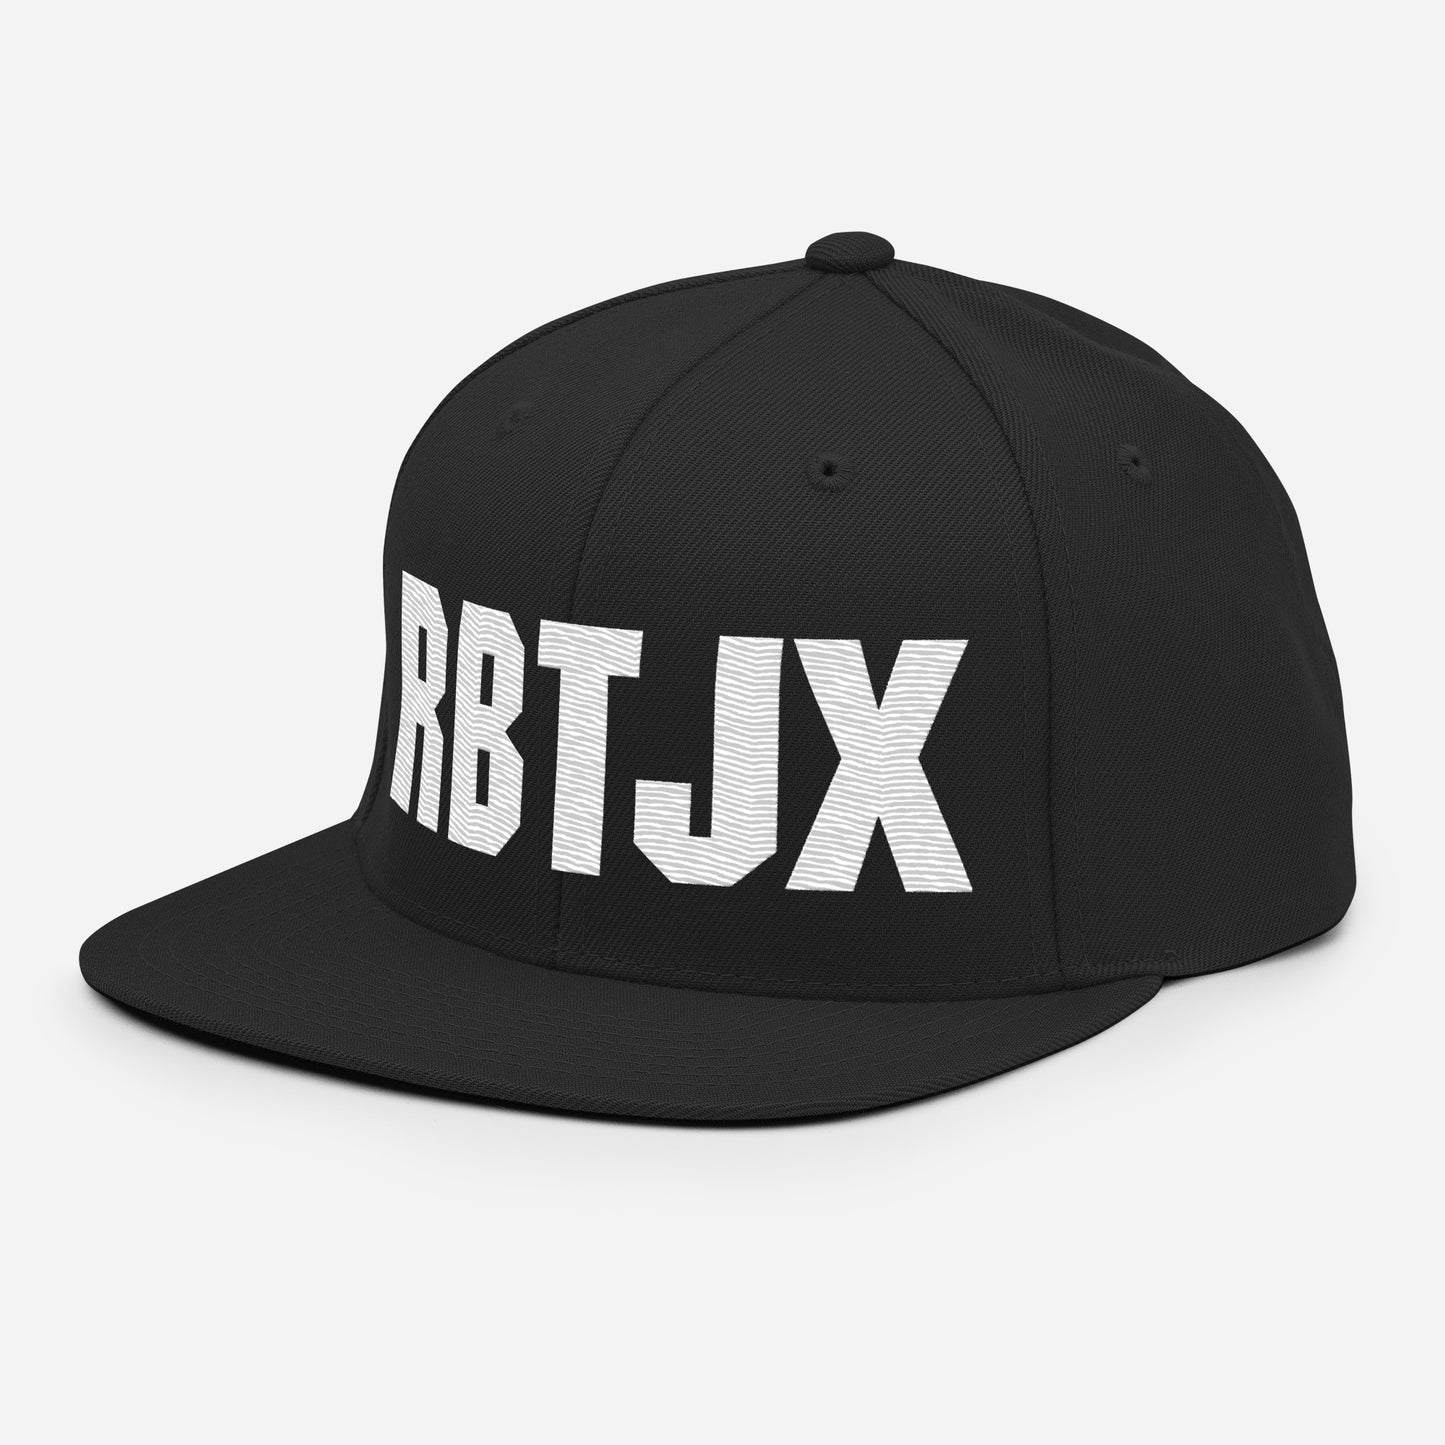 RBTJX Snapback Hat